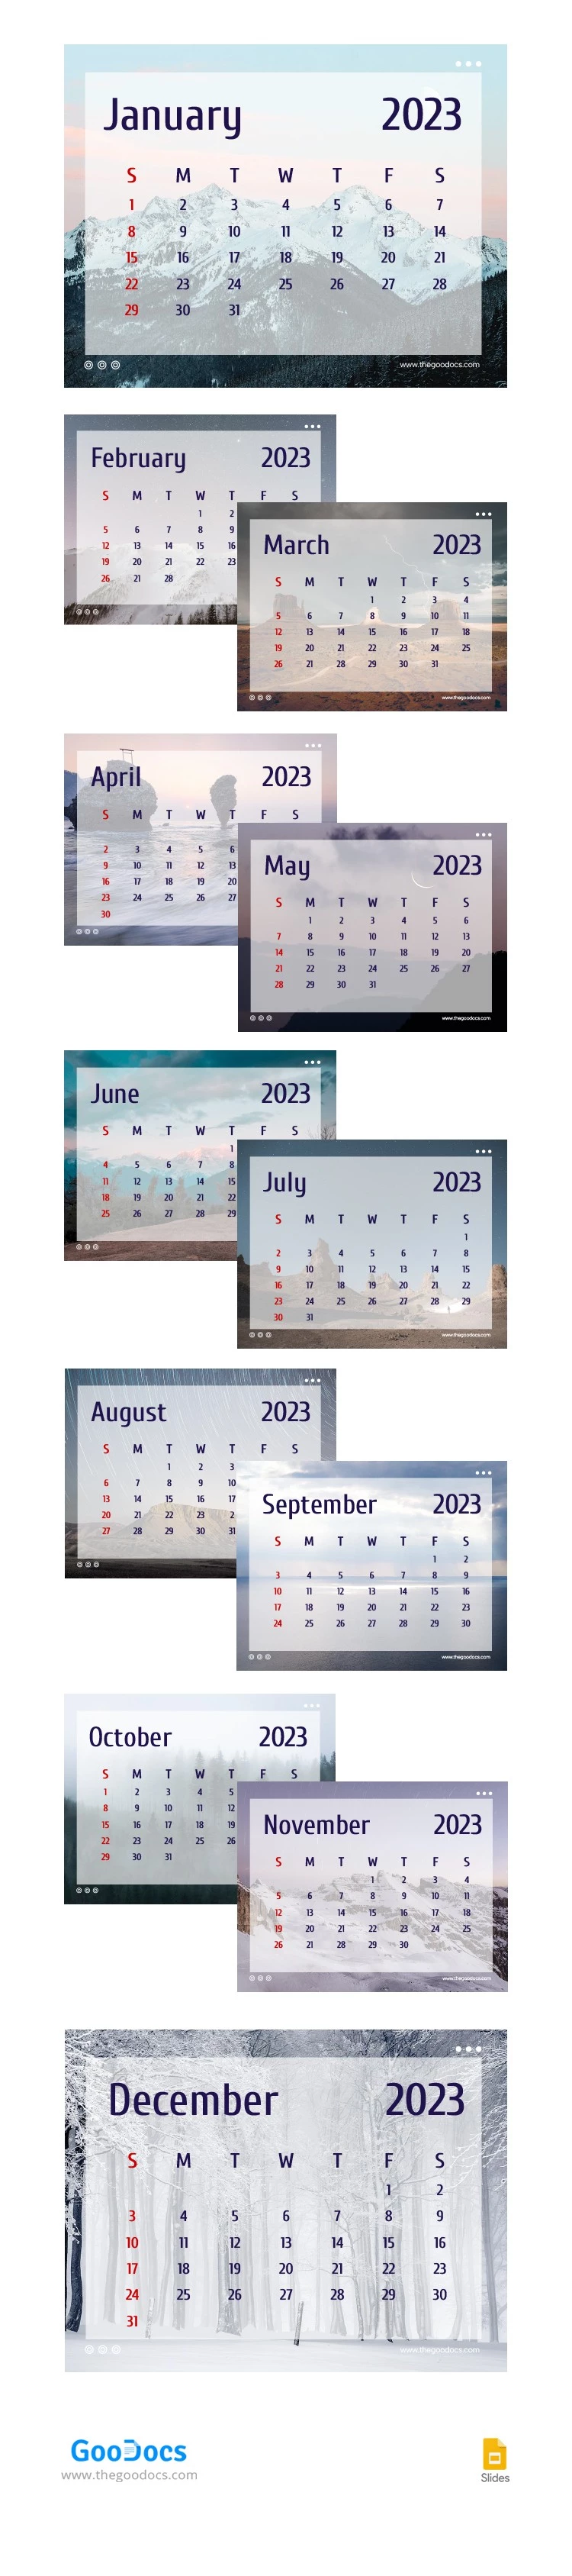 Calendario de la Naturaleza 2023 - free Google Docs Template - 10064722